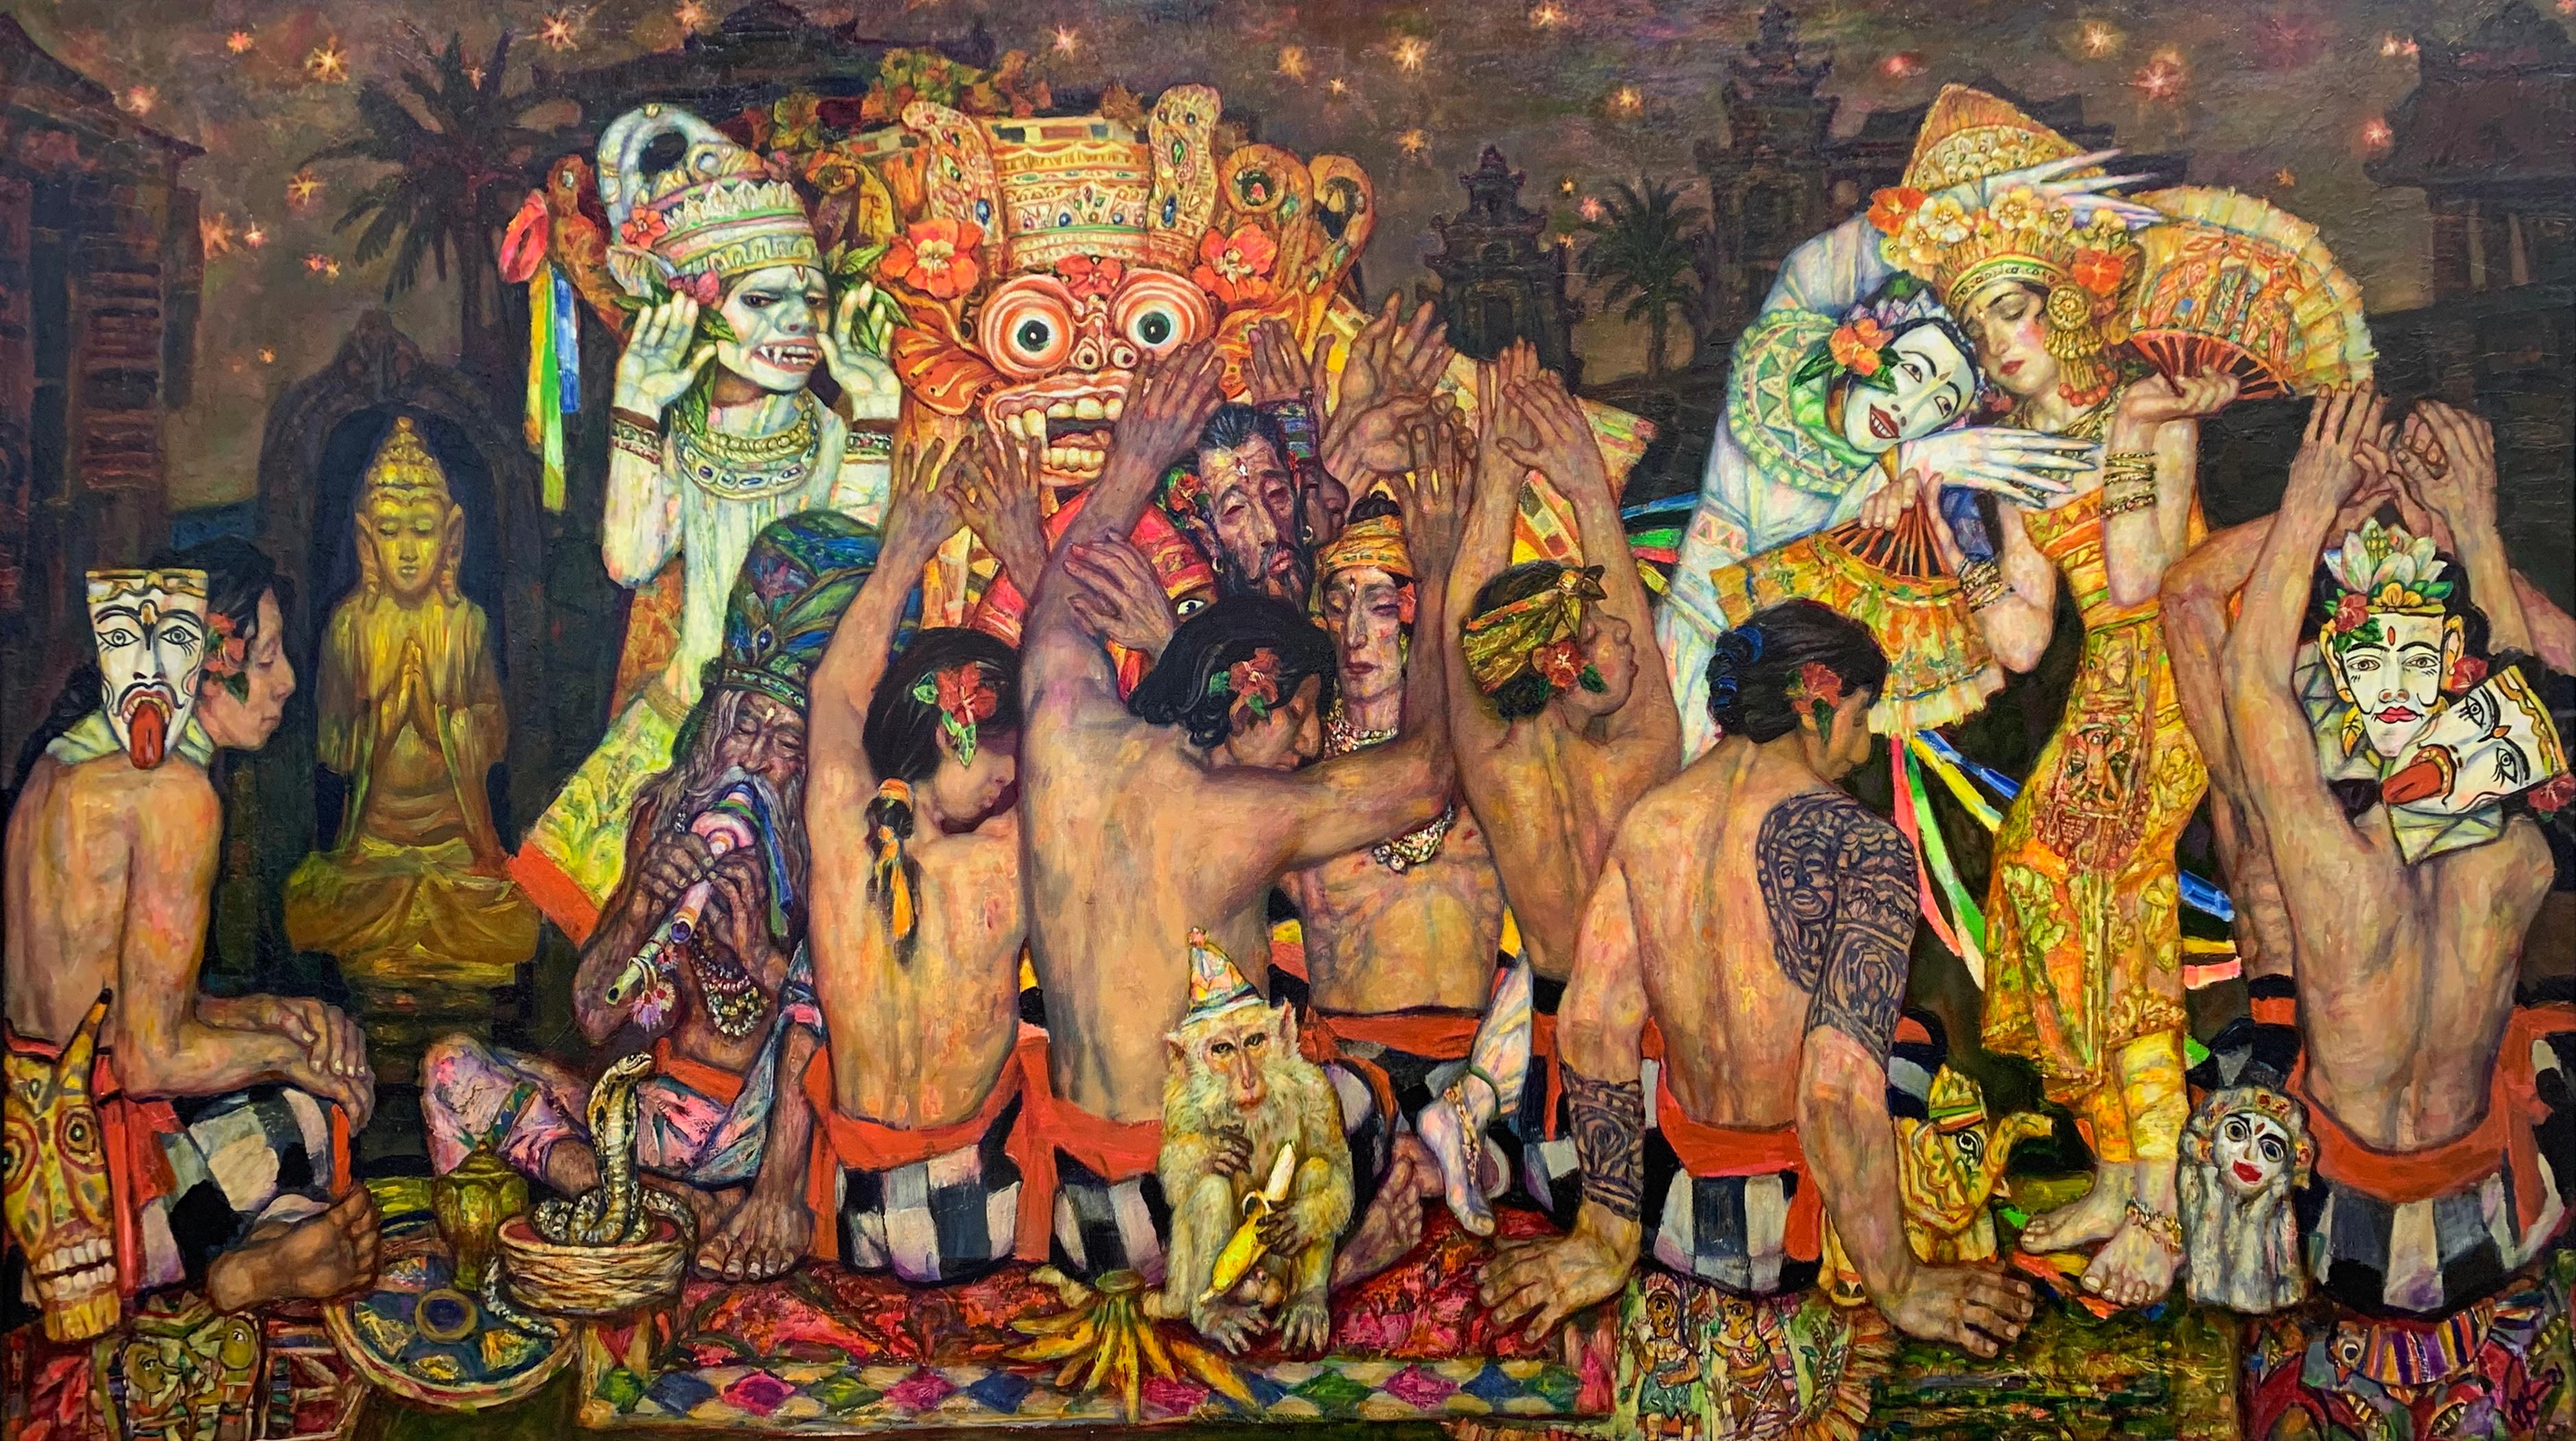 Kechak (Indonesia). Original modern art painting